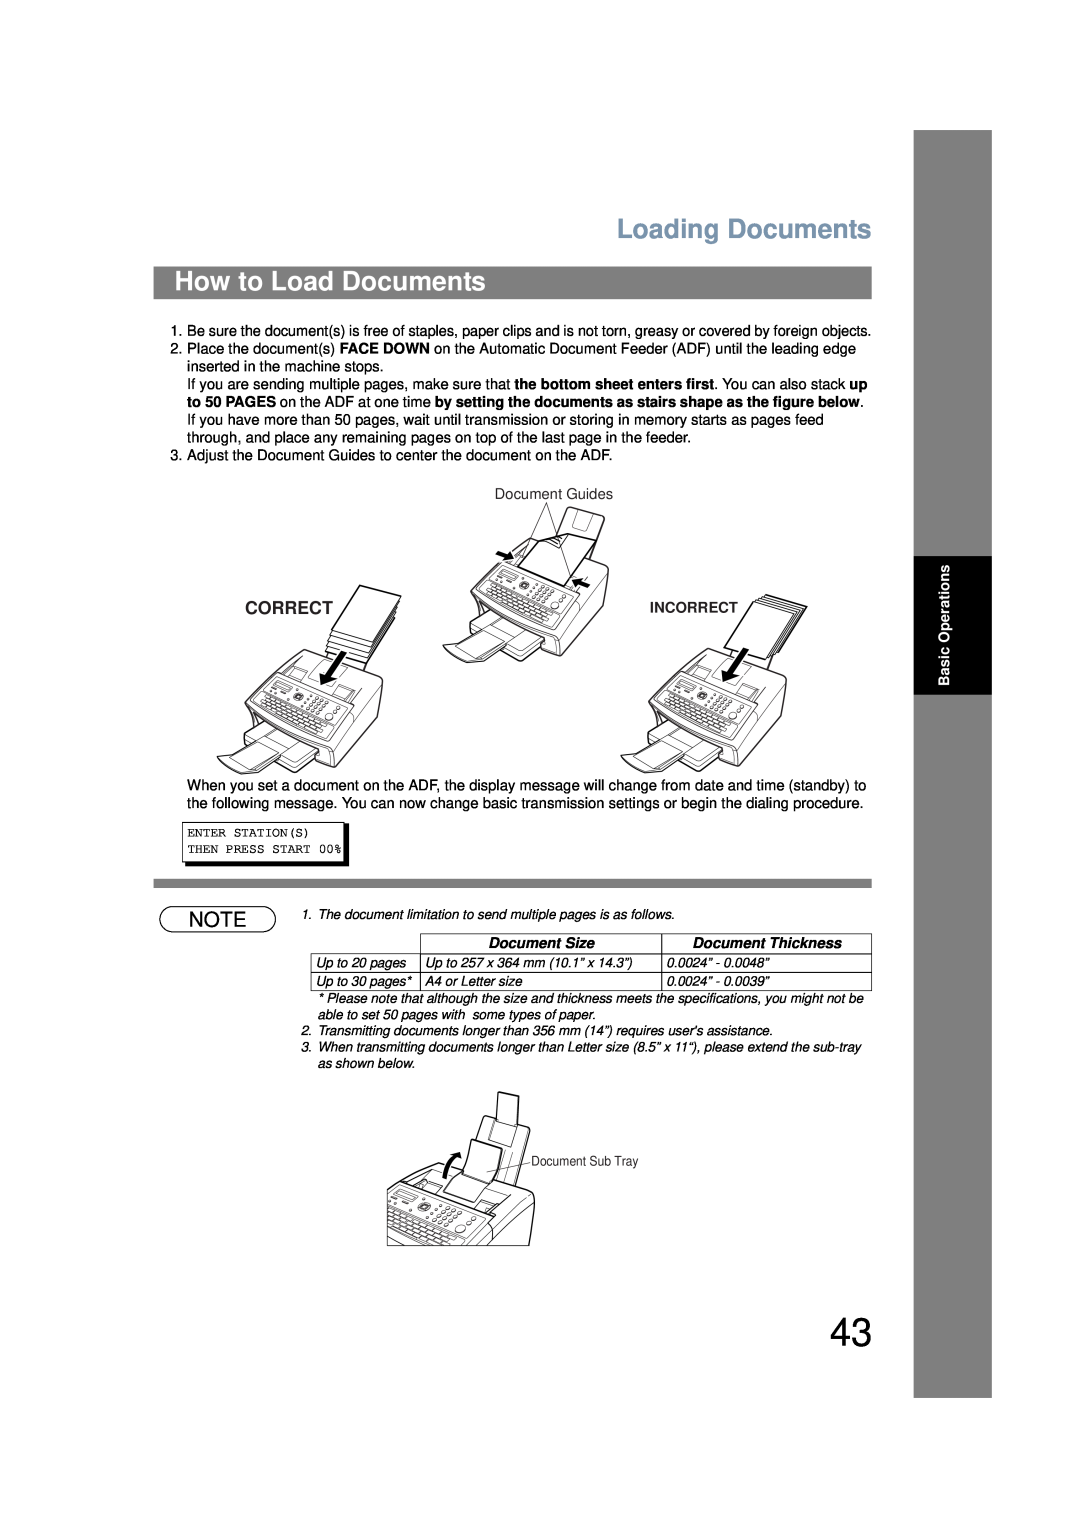 Panasonic UF-6200 Loading Documents, How to Load Documents, Correct, Incorrect, Document Size, Document Thickness 